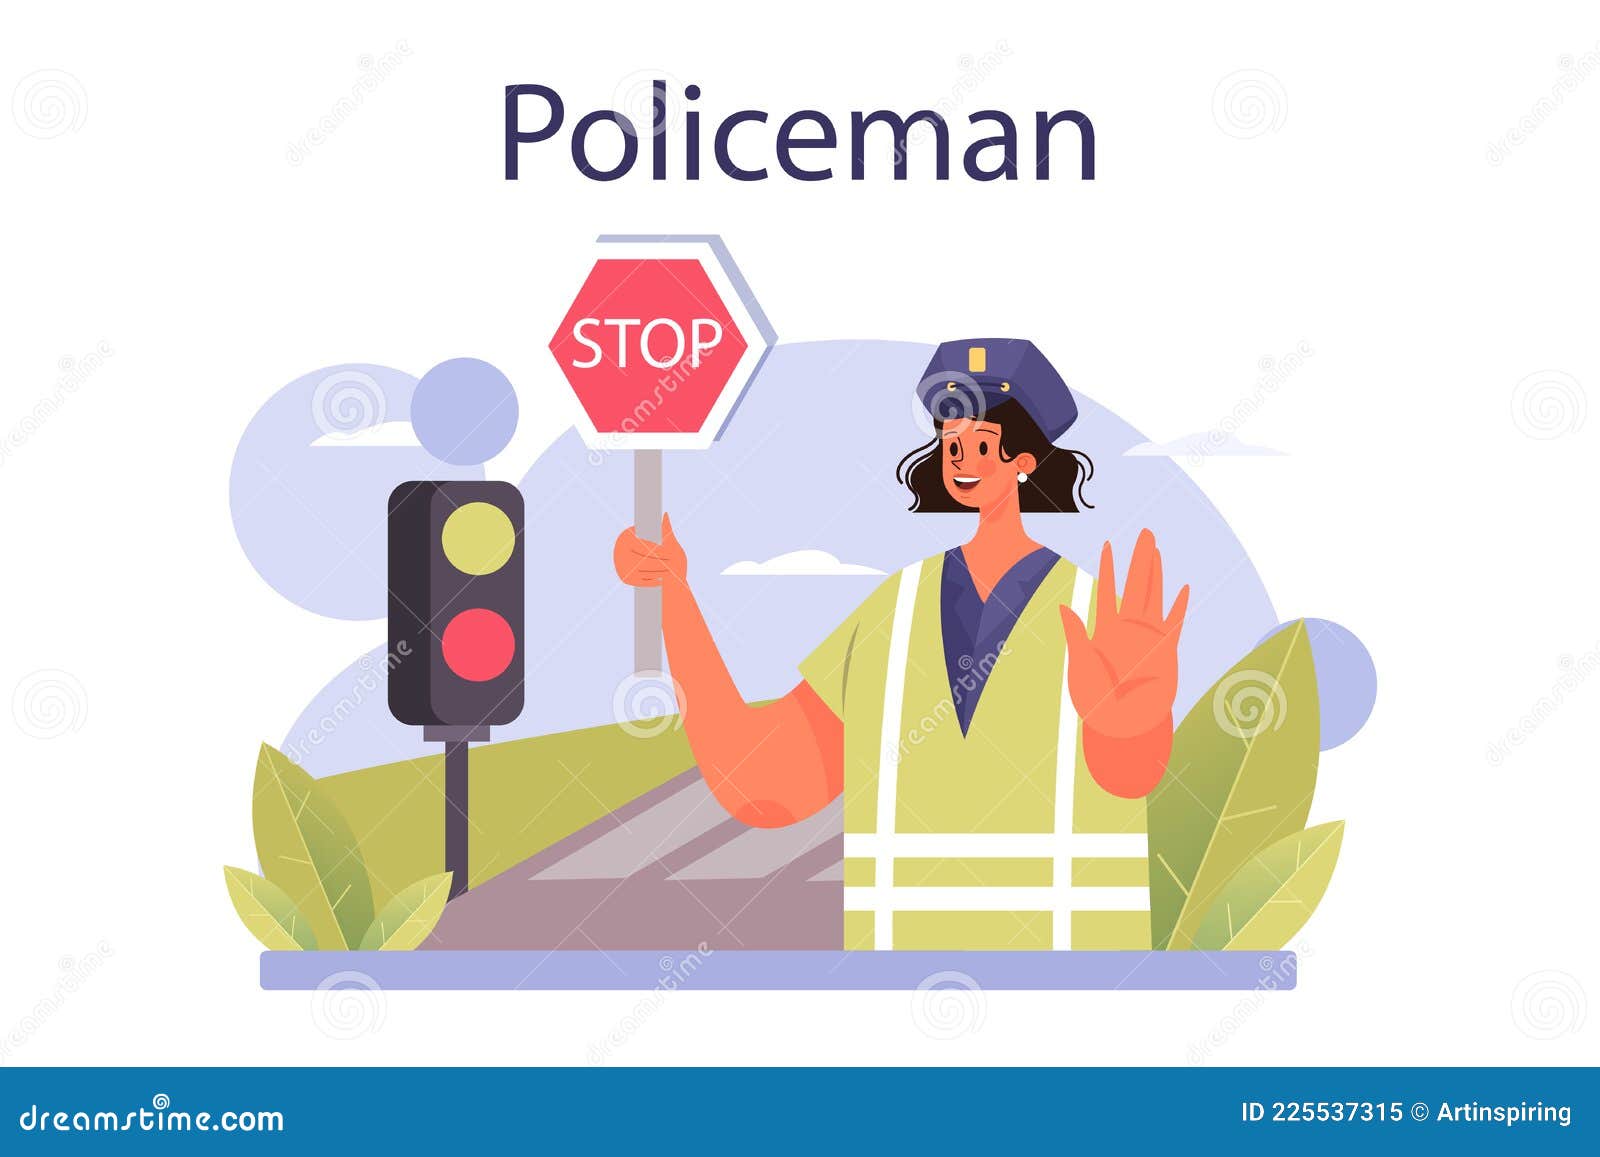 Policeman Concept Illustration 99706050